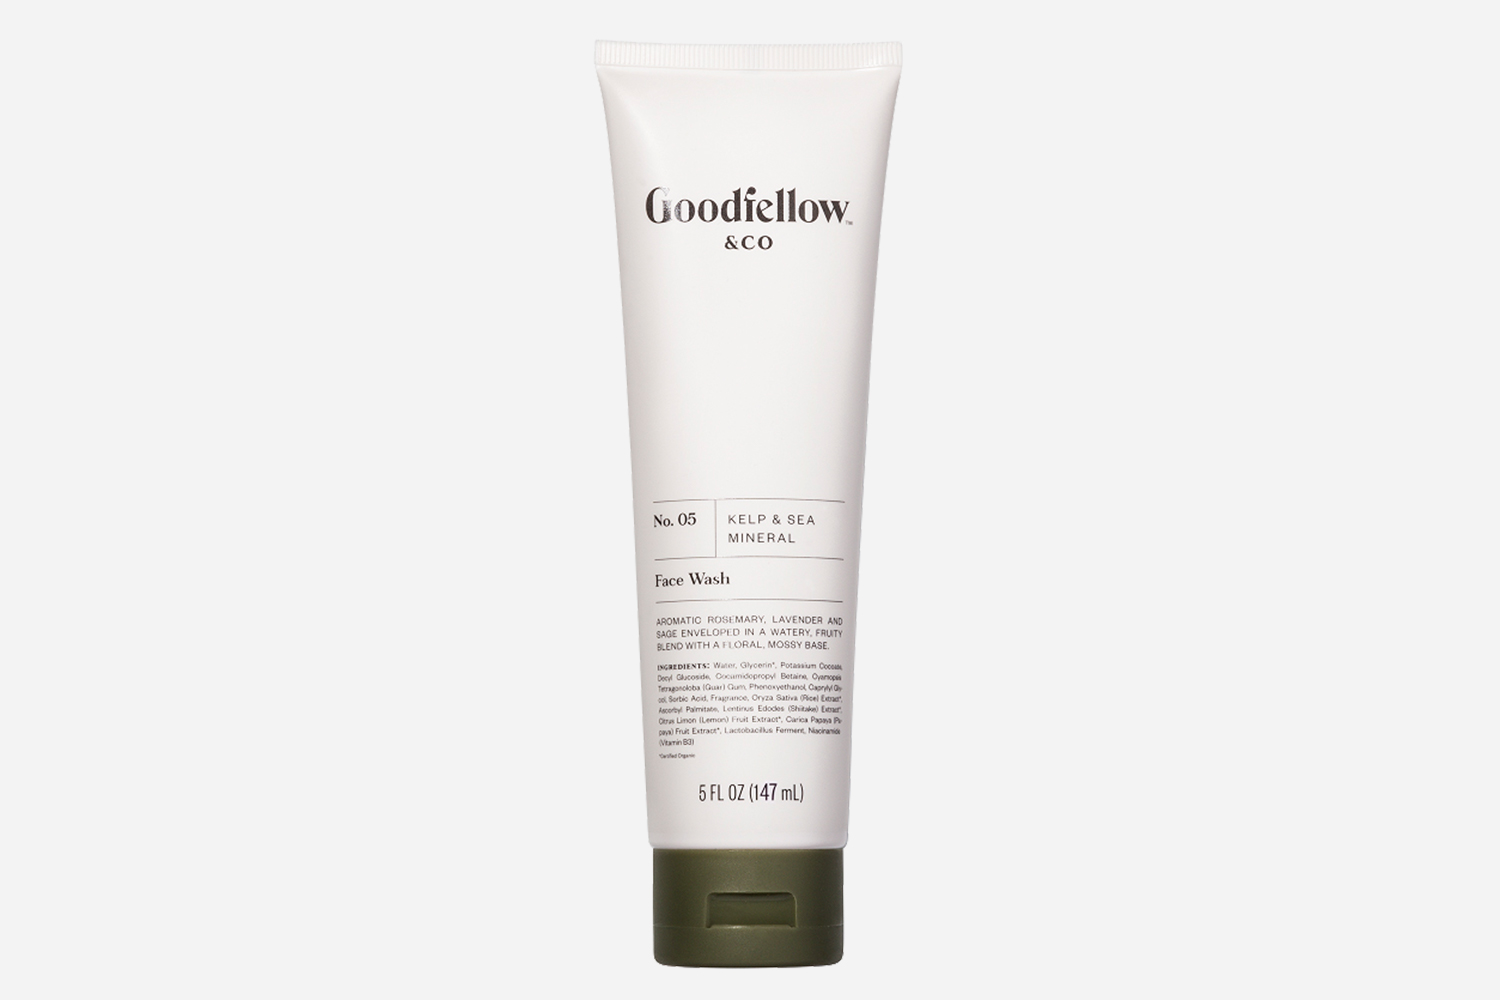 Goodfellow Target Face Wash